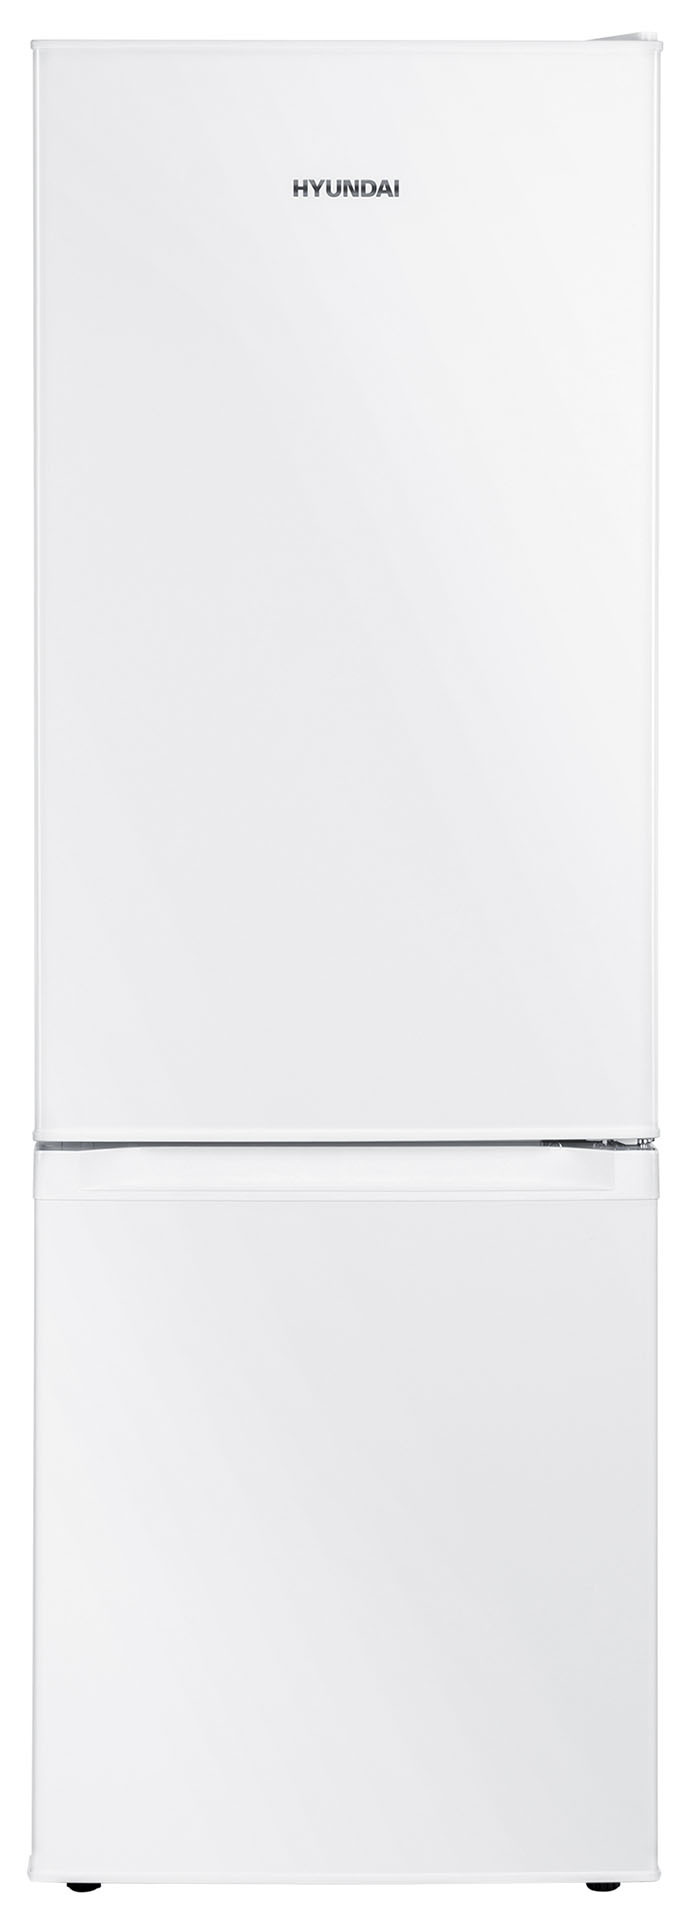 Холодильник HYUNDAI CC2051WT белый холодильник hyundai cs6503fv